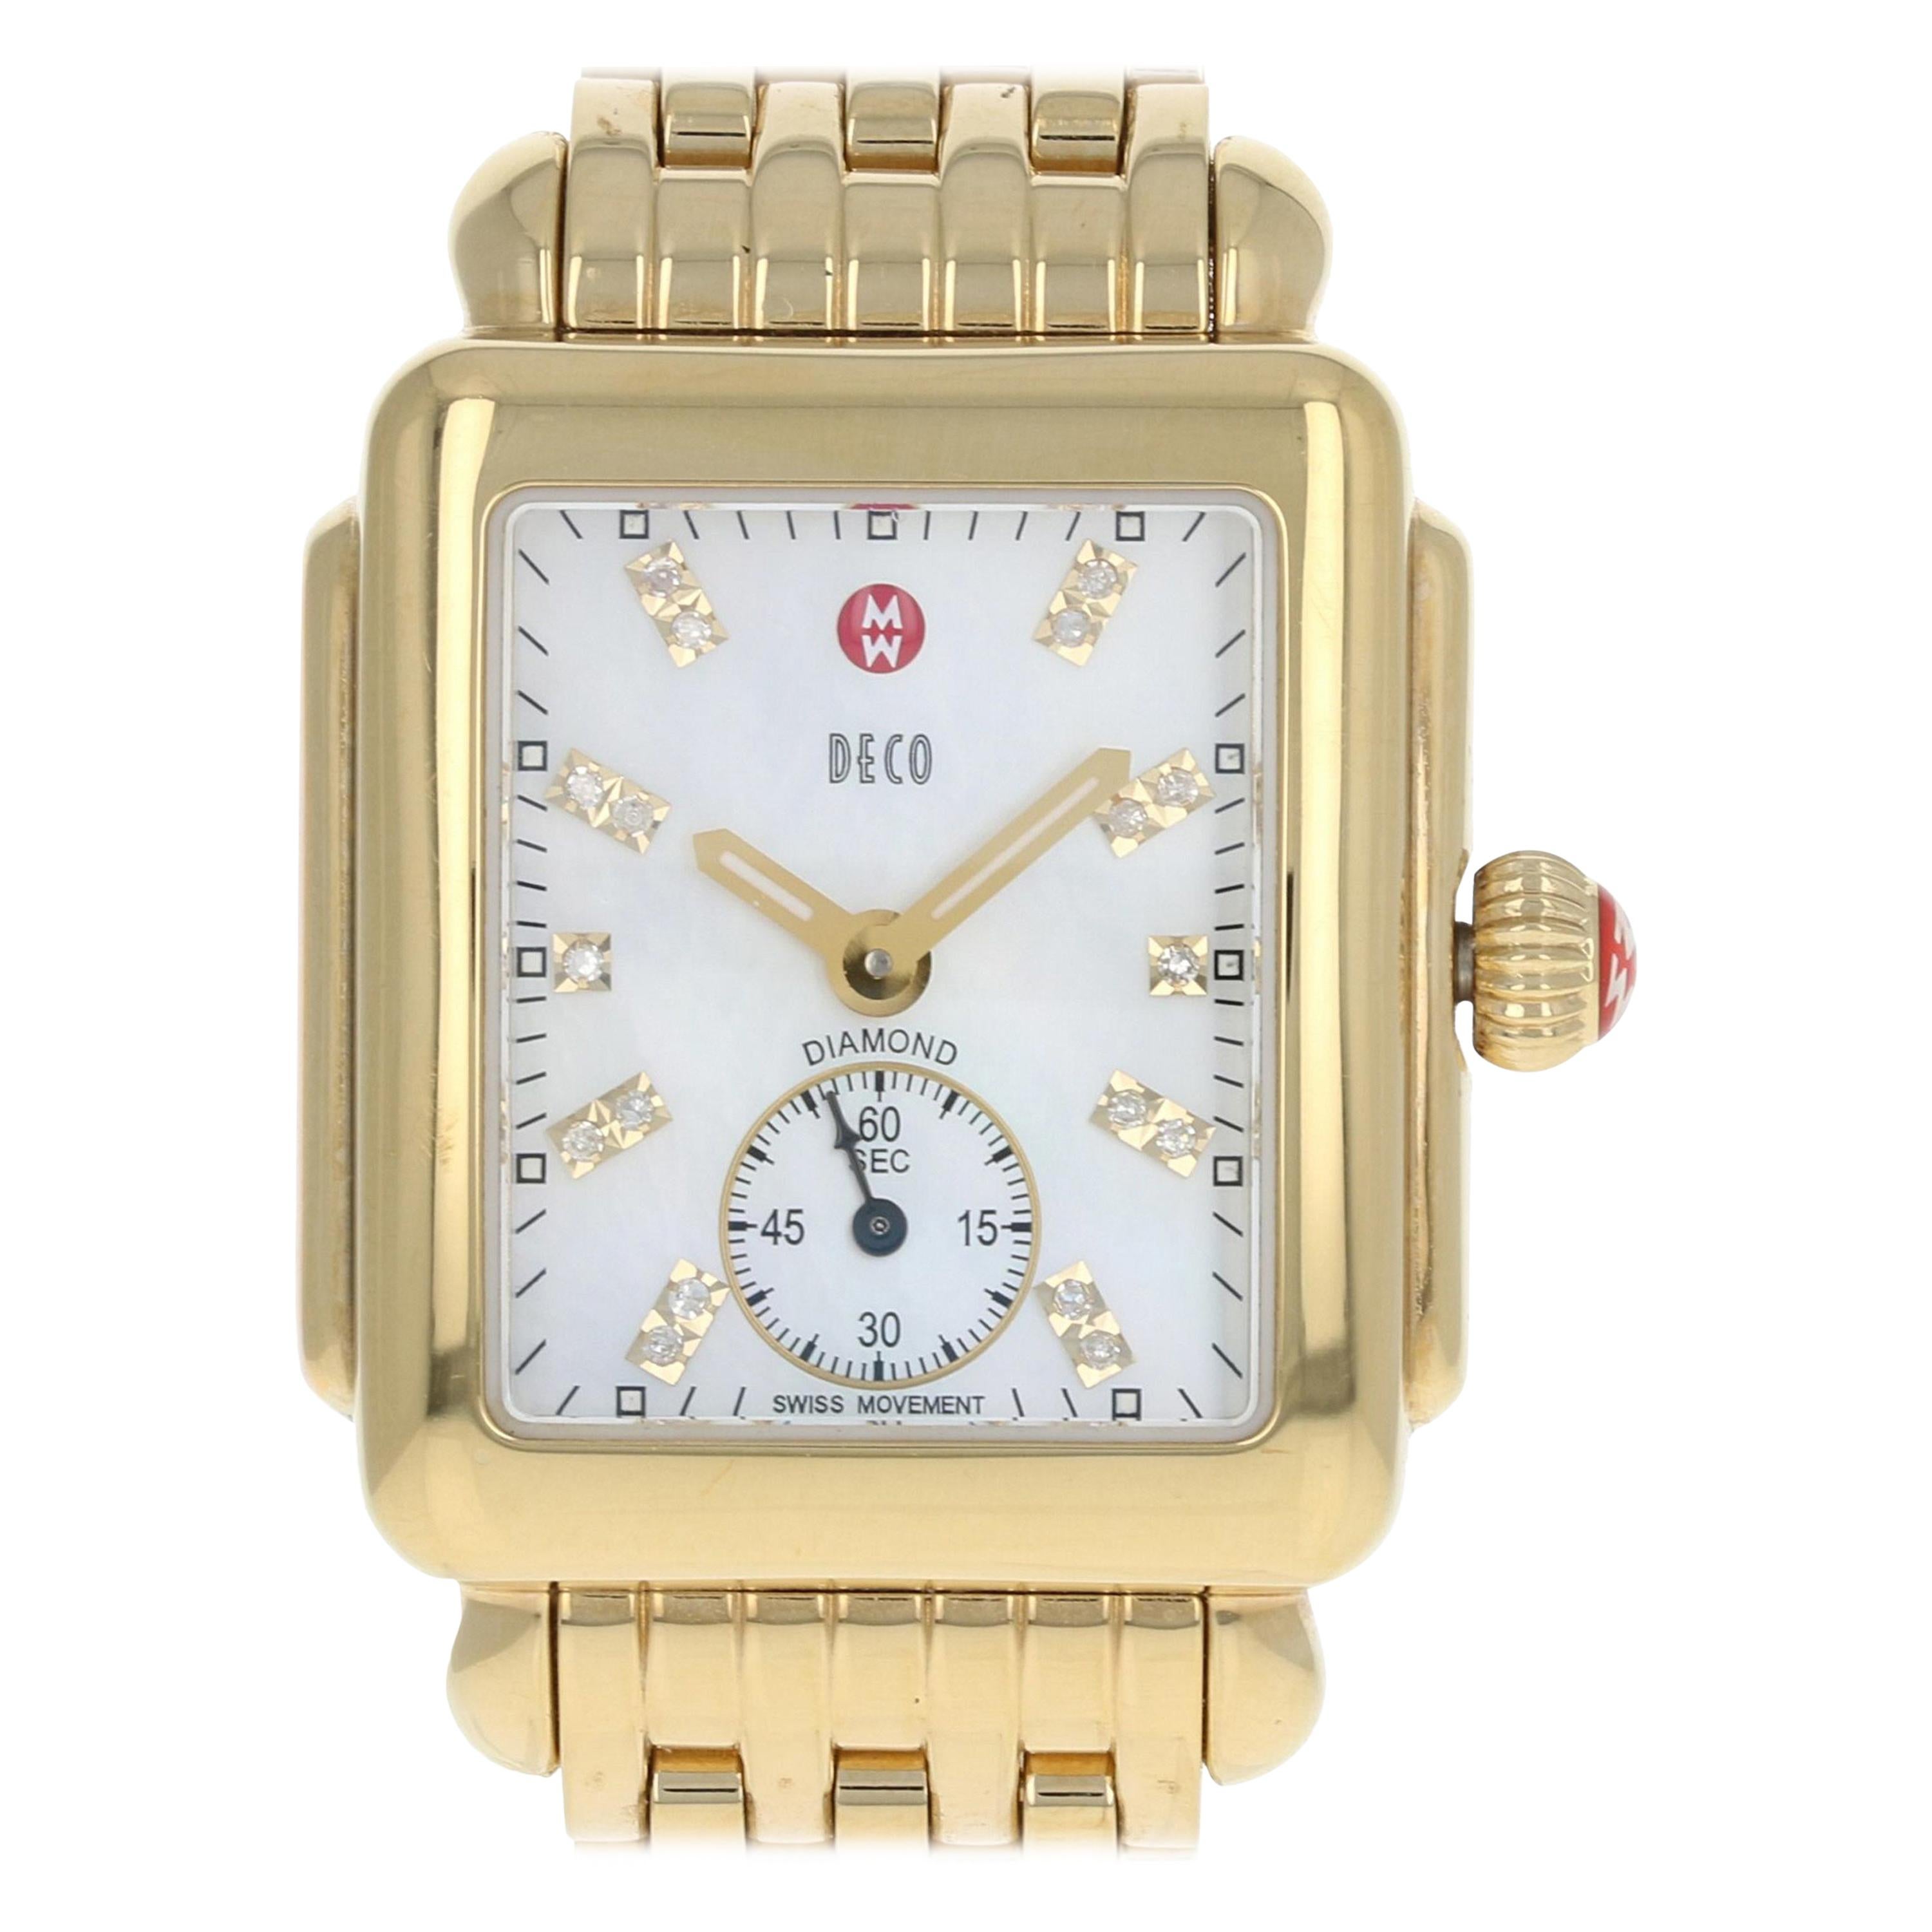 Michele Deco Watch - For Sale on 1stDibs | michele deco watch sale 